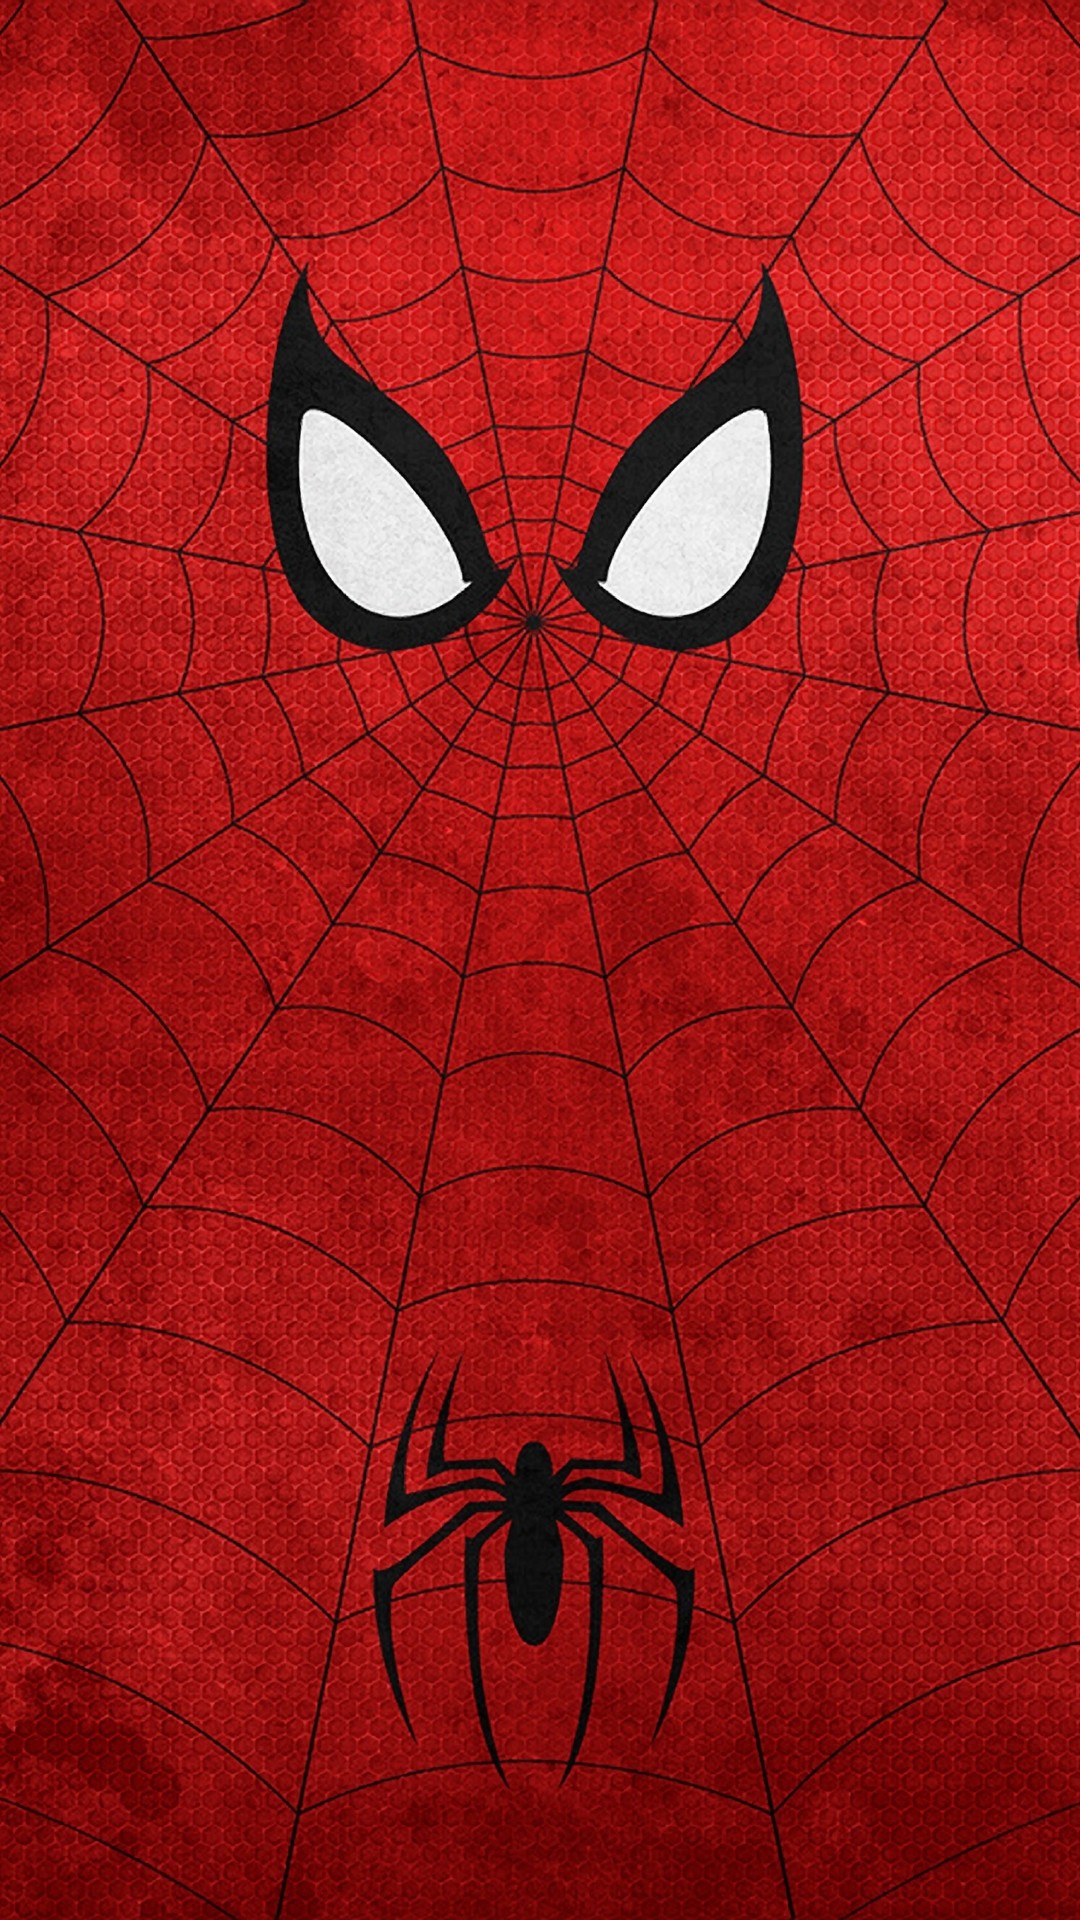 1080x1920 minimalist superhero wallpaper - Buscar con Google Â· Spiderman ...